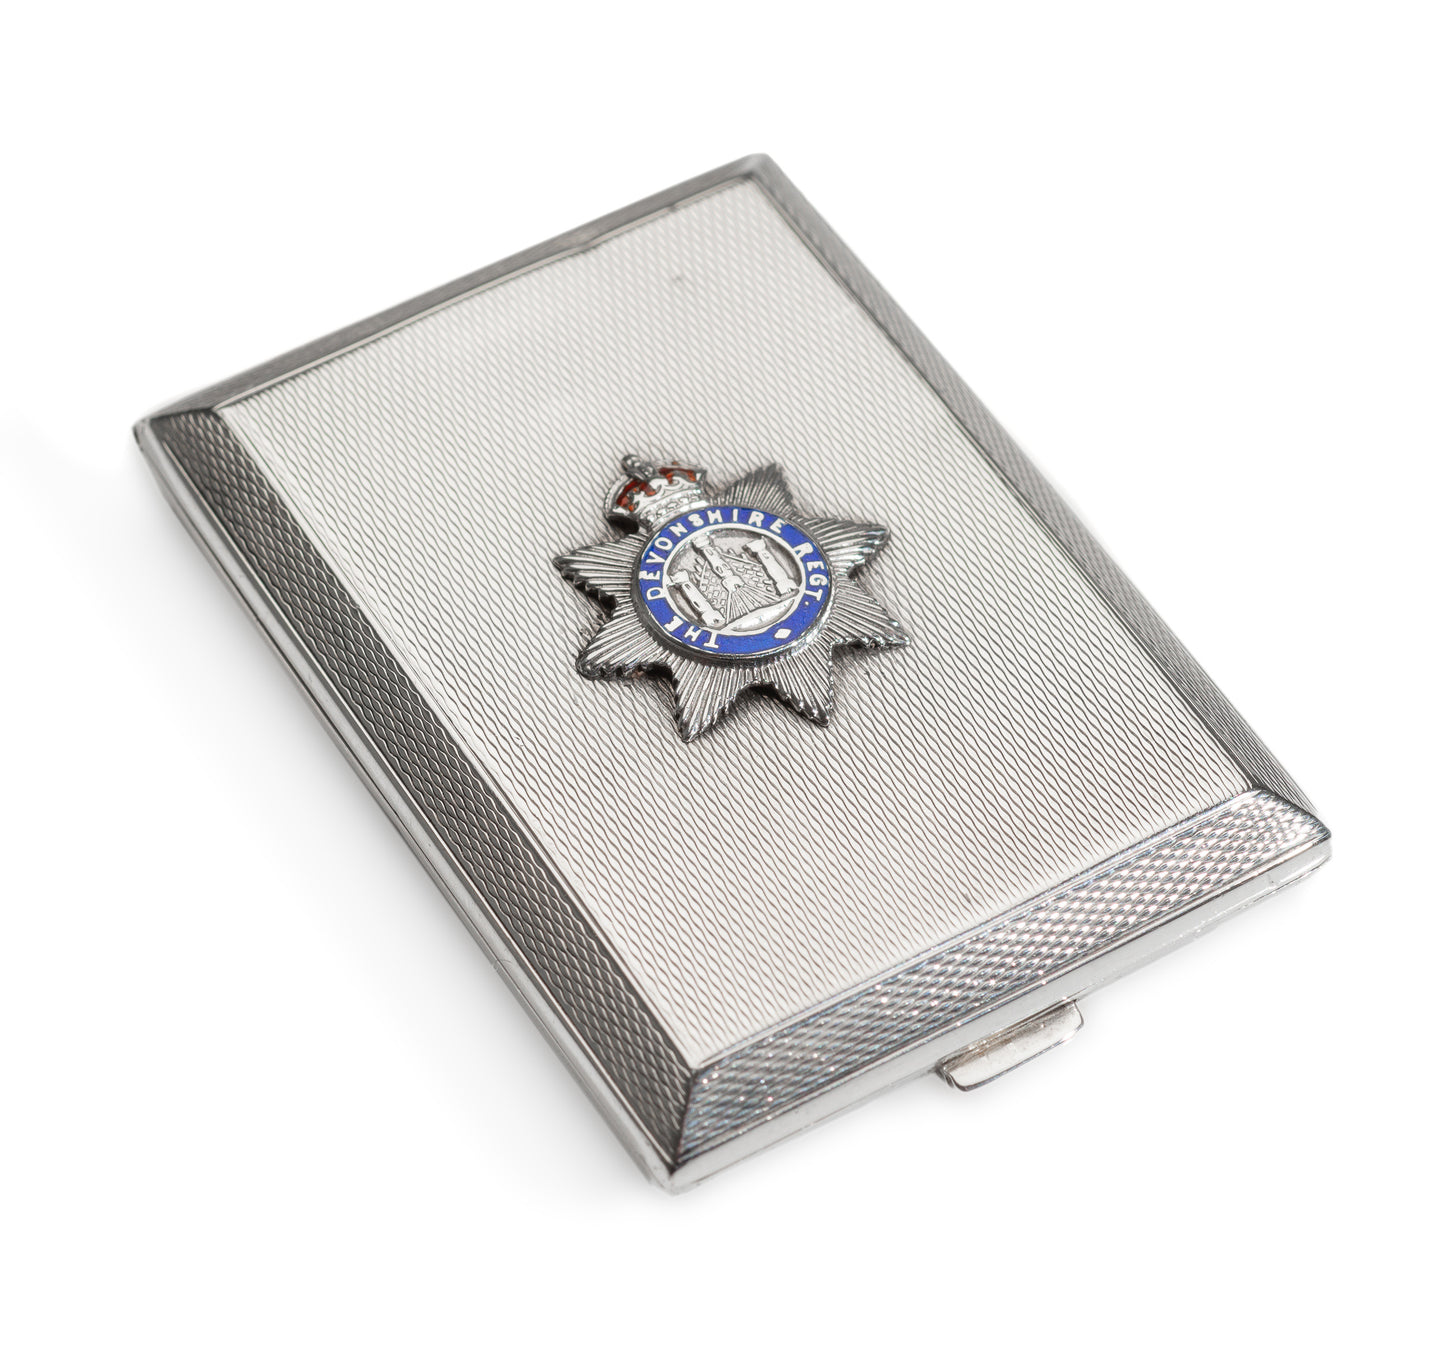 Art Deco Devonshire Regiment Silver & Enamel Match Book Vesta Case with Insignia (Code 1244)